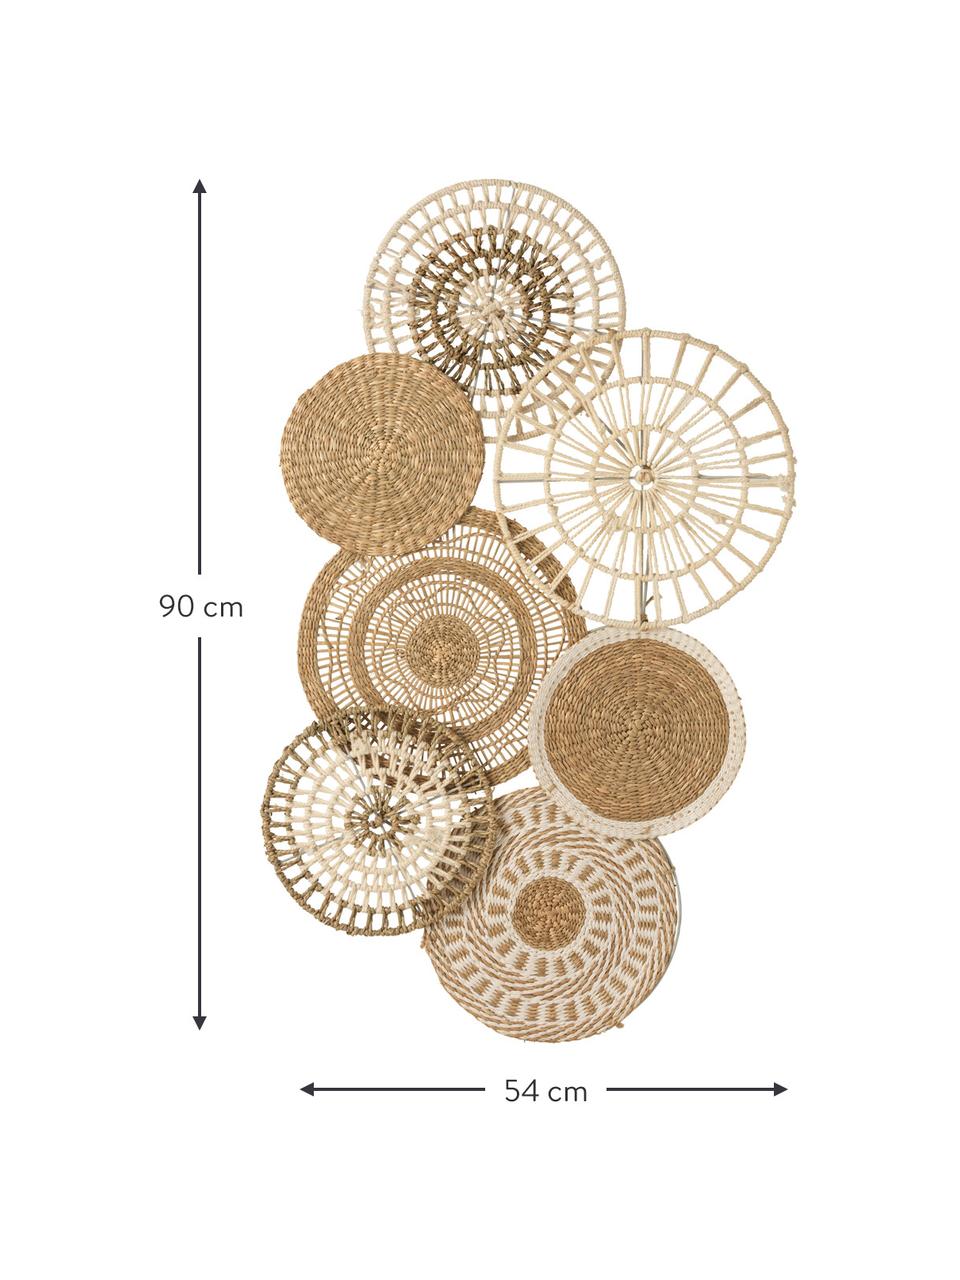 Nástěnná dekorace z mořské trávy a bavlny Circles, Mořská tráva, bavlna, Béžová, bílá, Š 54 cm, V 90 cm